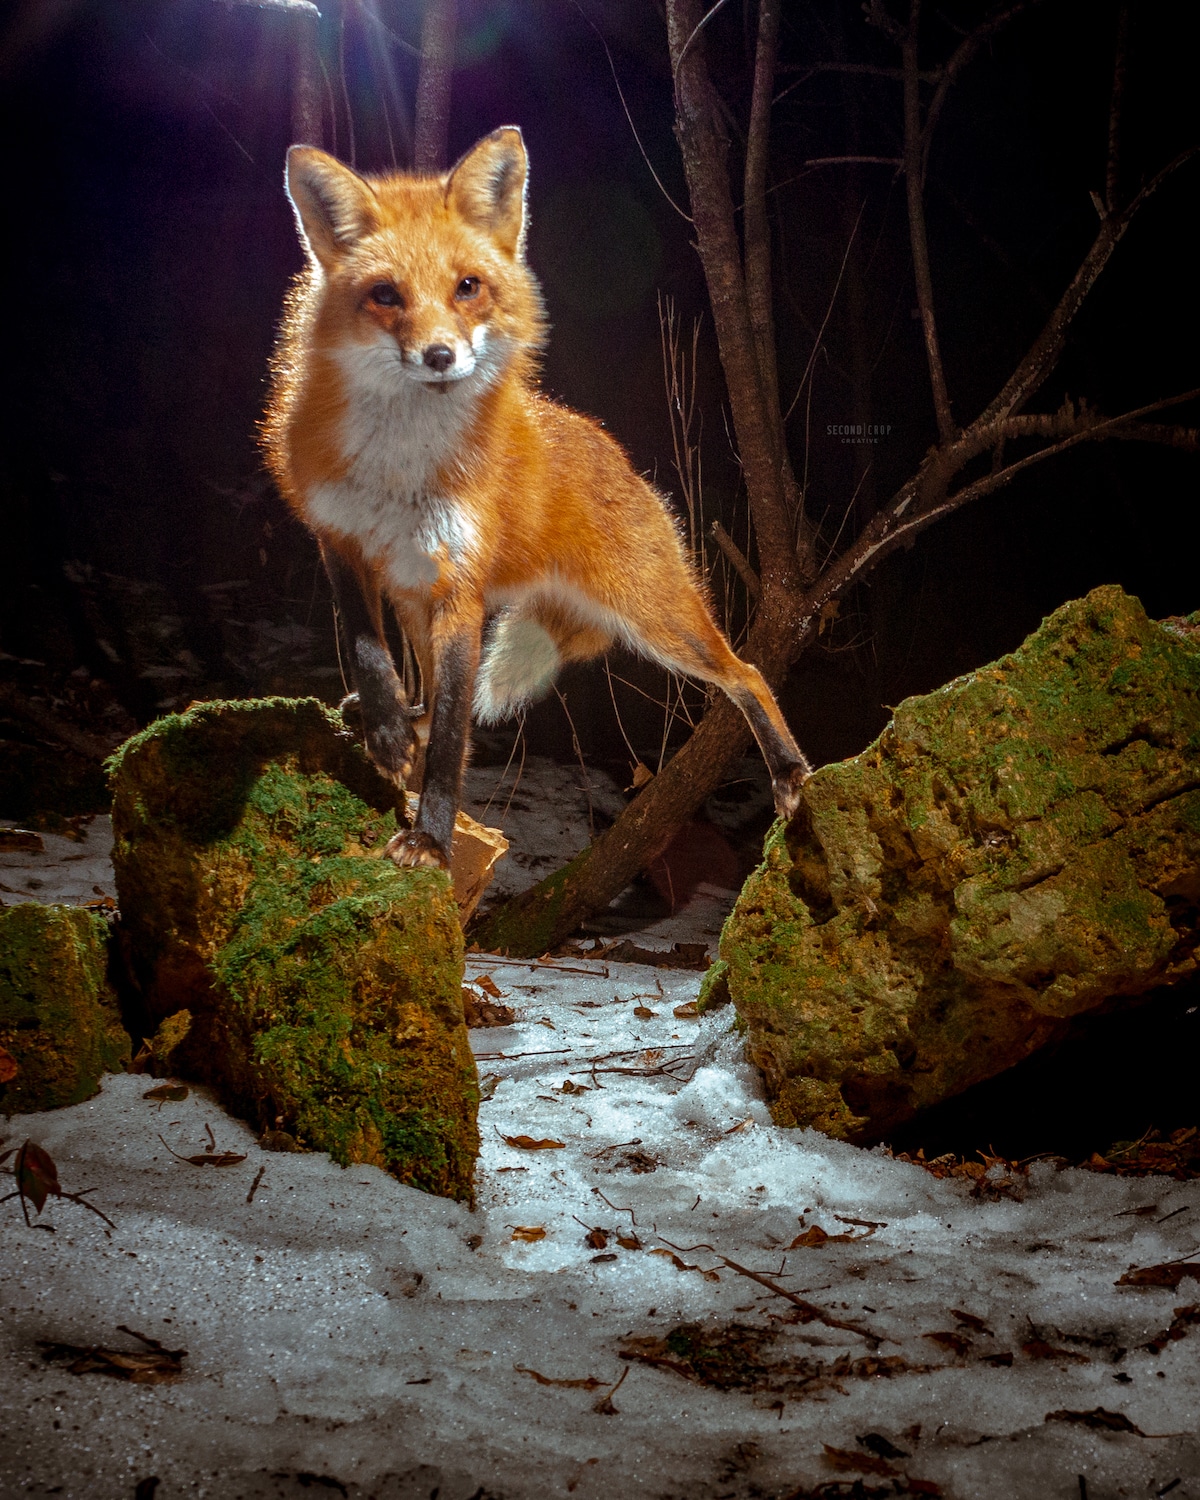 Storybook Fox Photos Captured on DIY Camera Trap